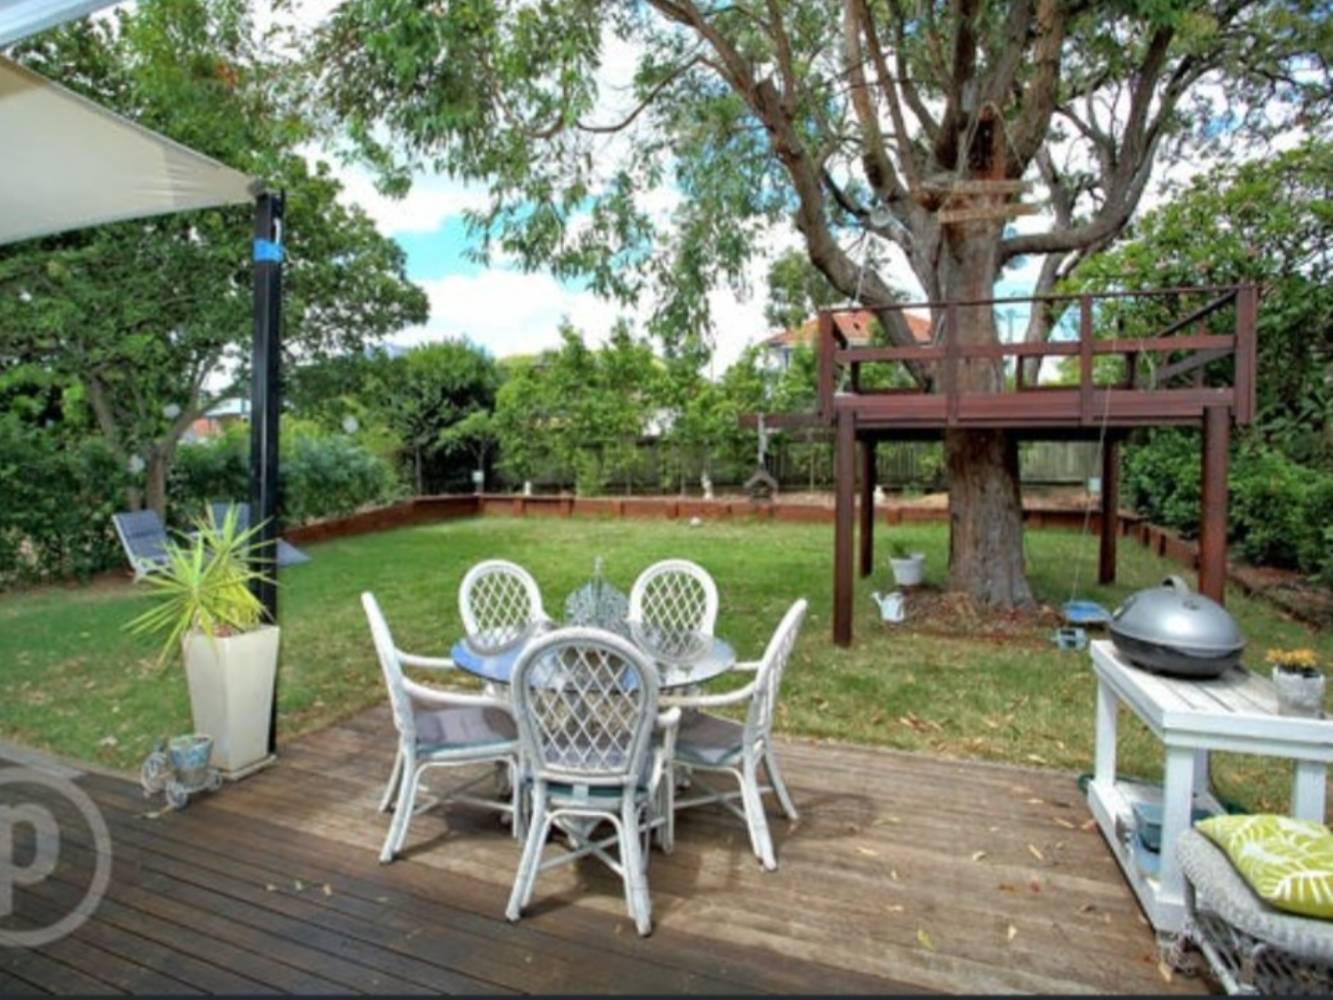 Backyard with treehouse